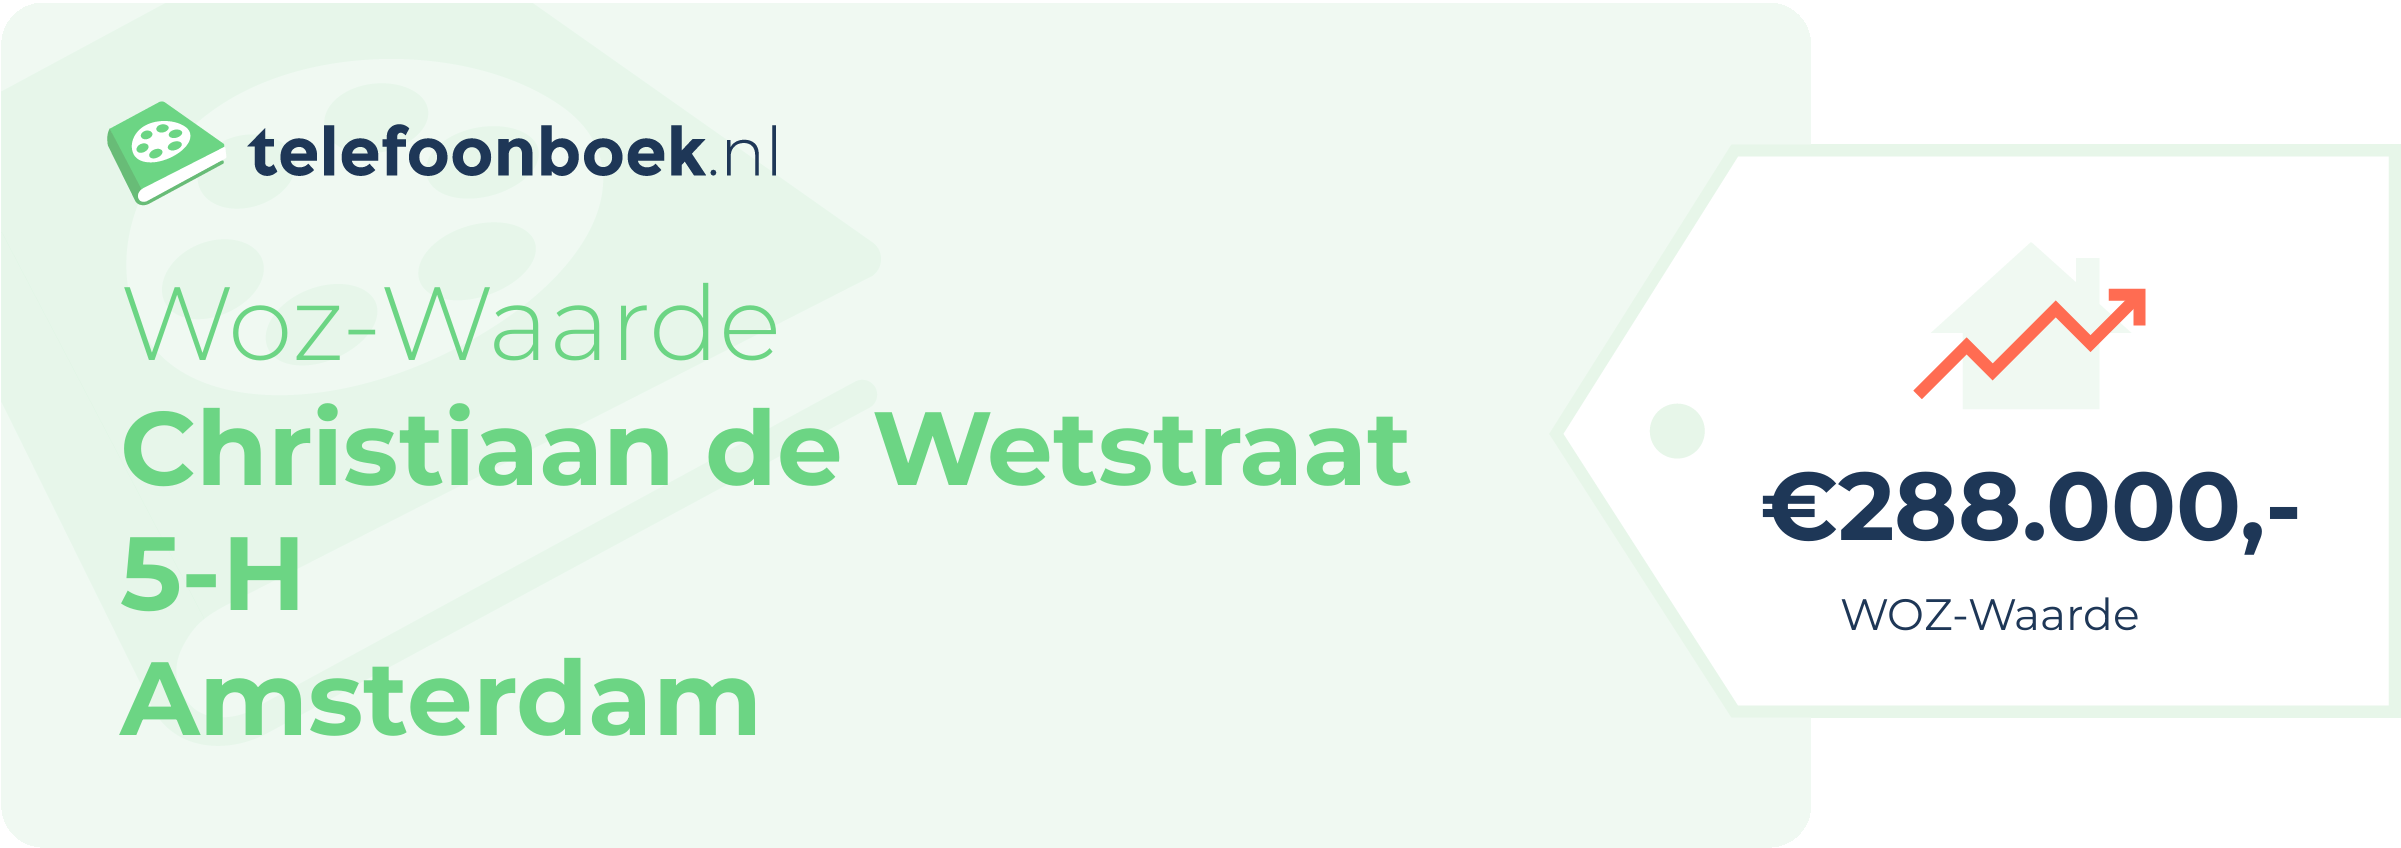 WOZ-waarde Christiaan De Wetstraat 5-H Amsterdam